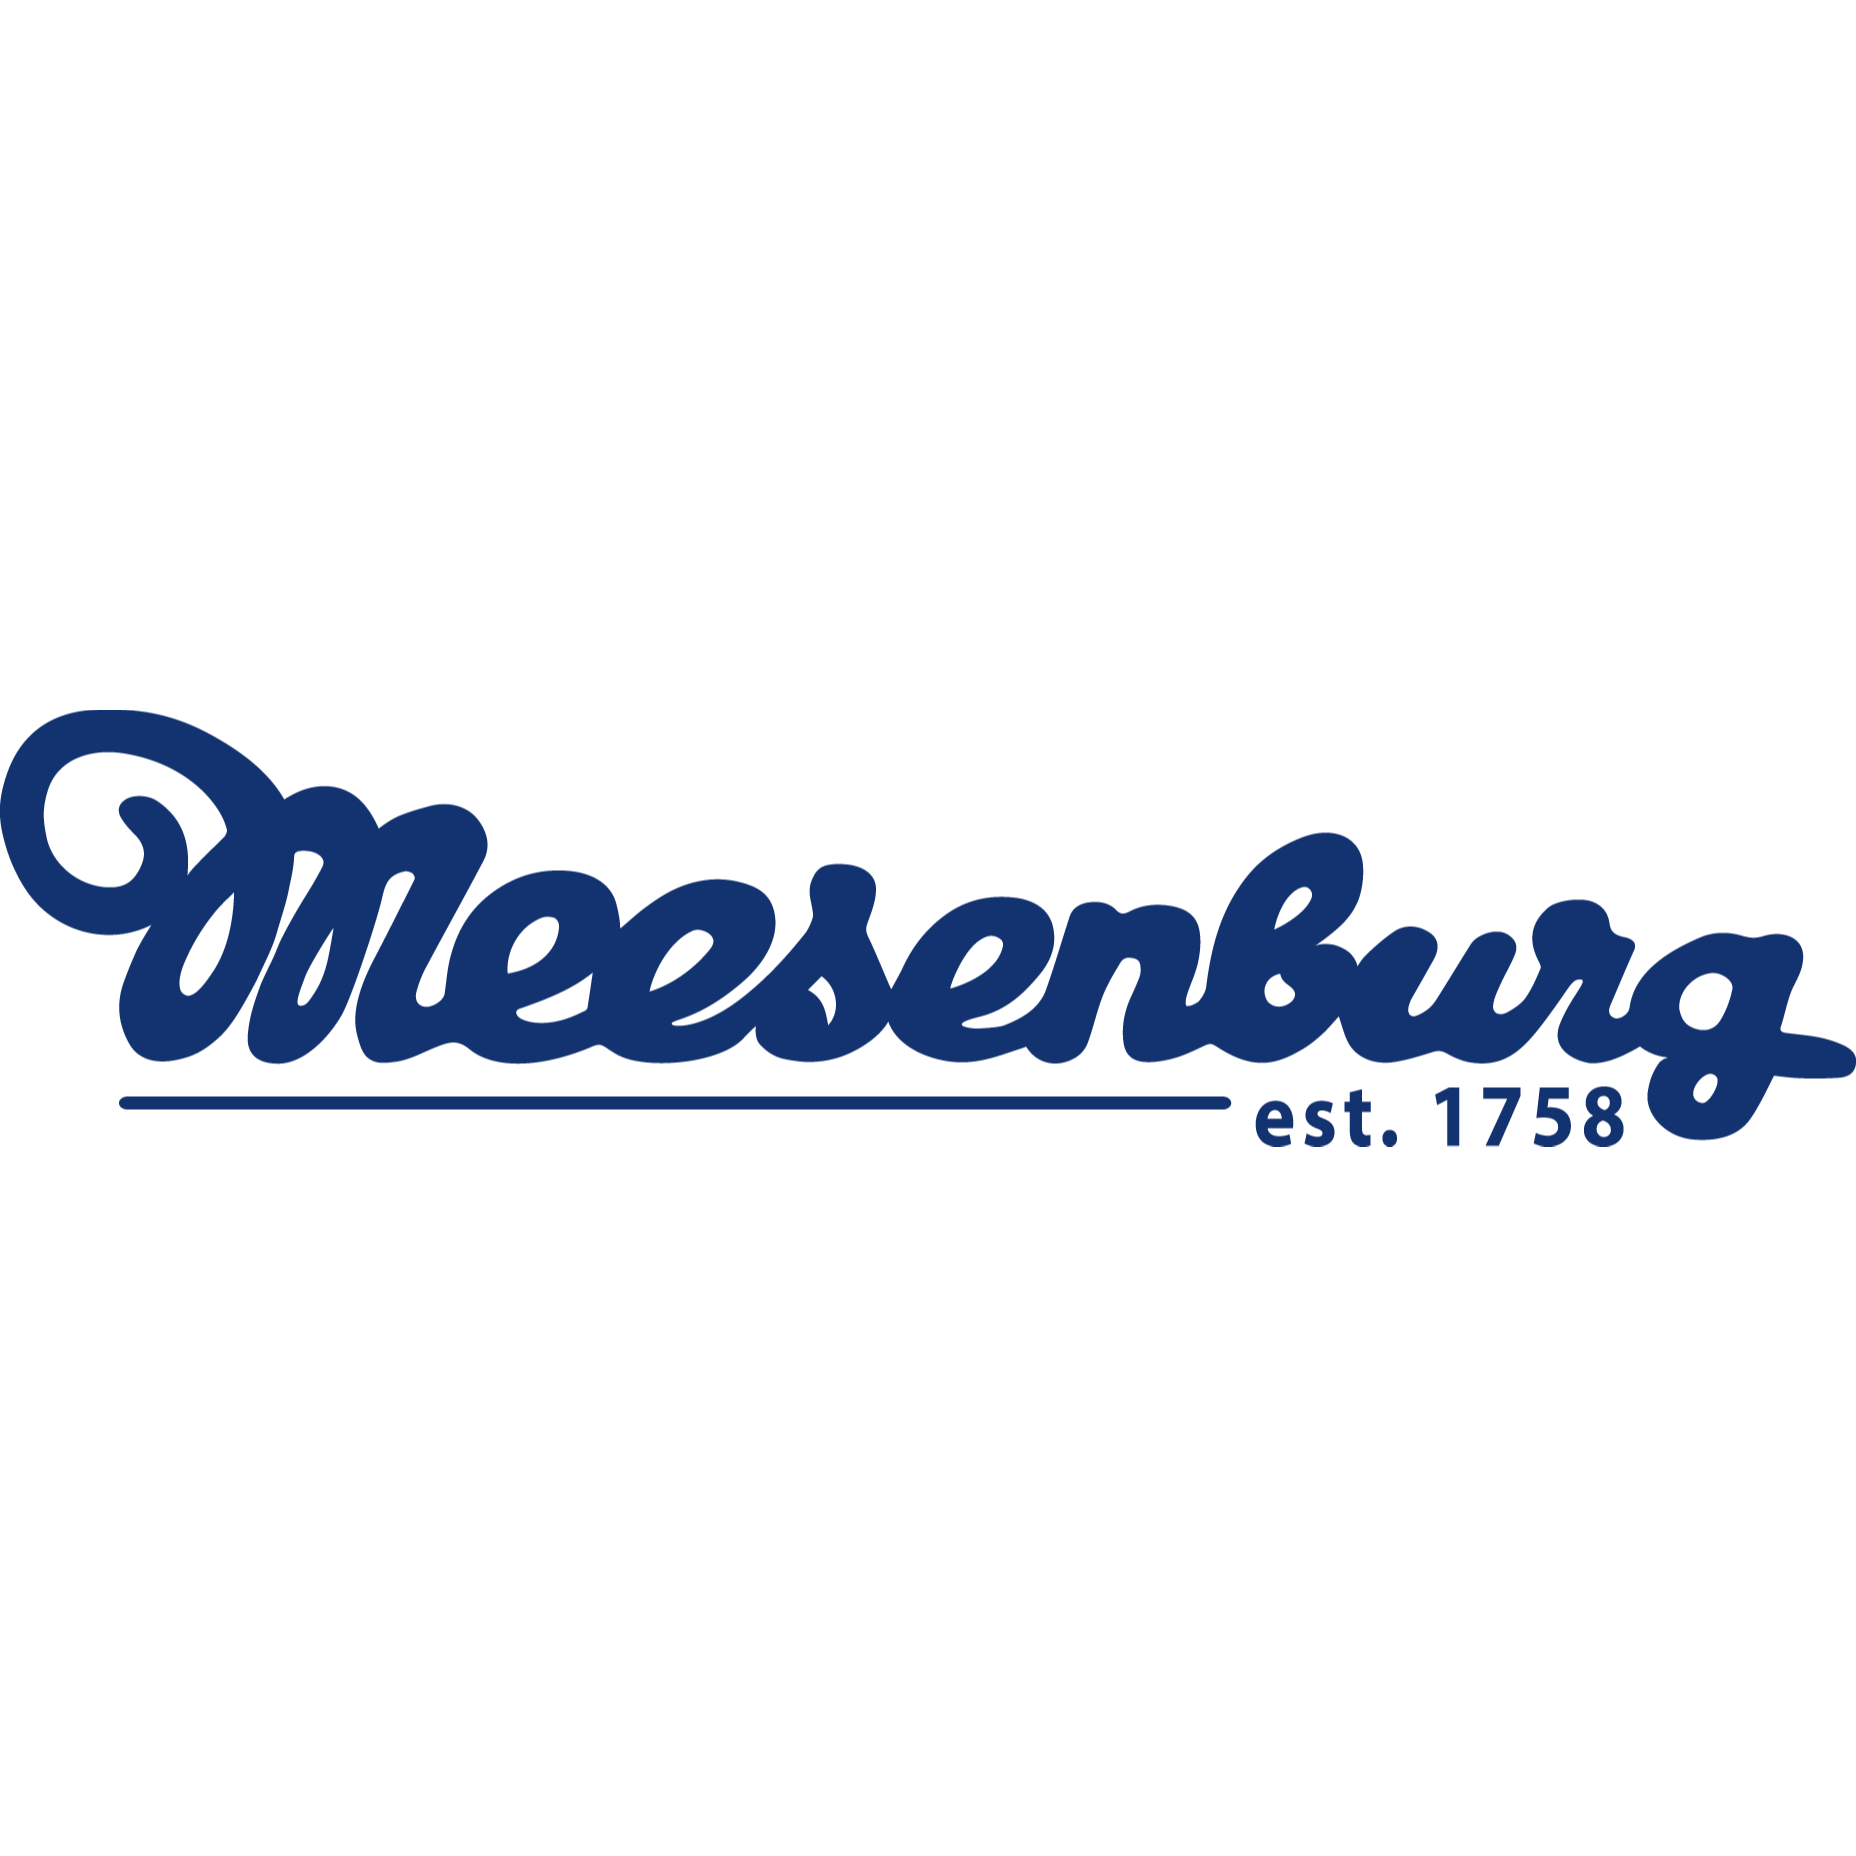 Meesenburg GmbH & Co. KG in Oldenburg Logo